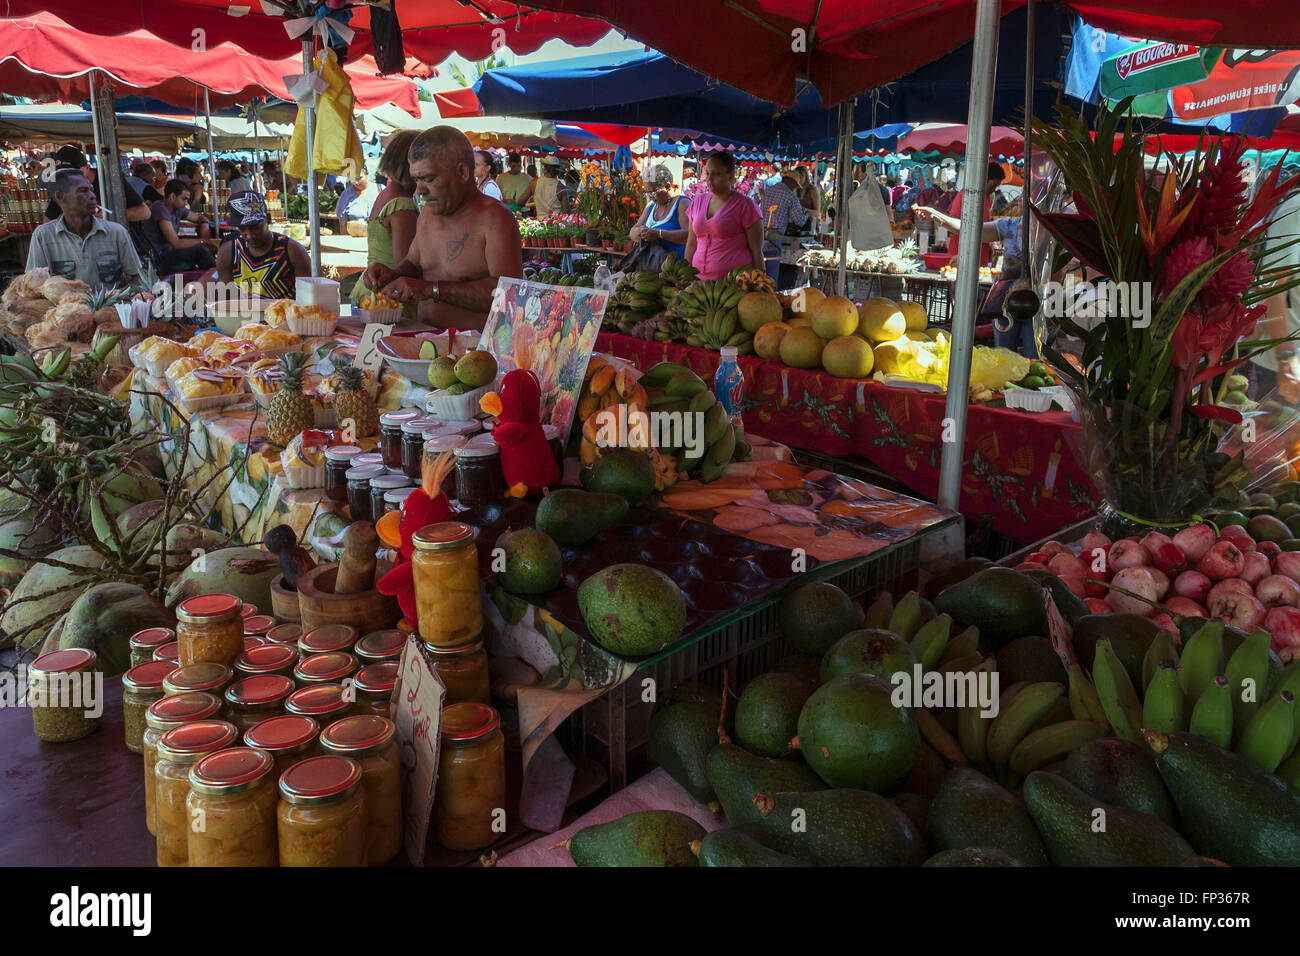 Vegetables and fruit for sale, market stalls, street markets, Saint Paul, Reunion Stock Photo